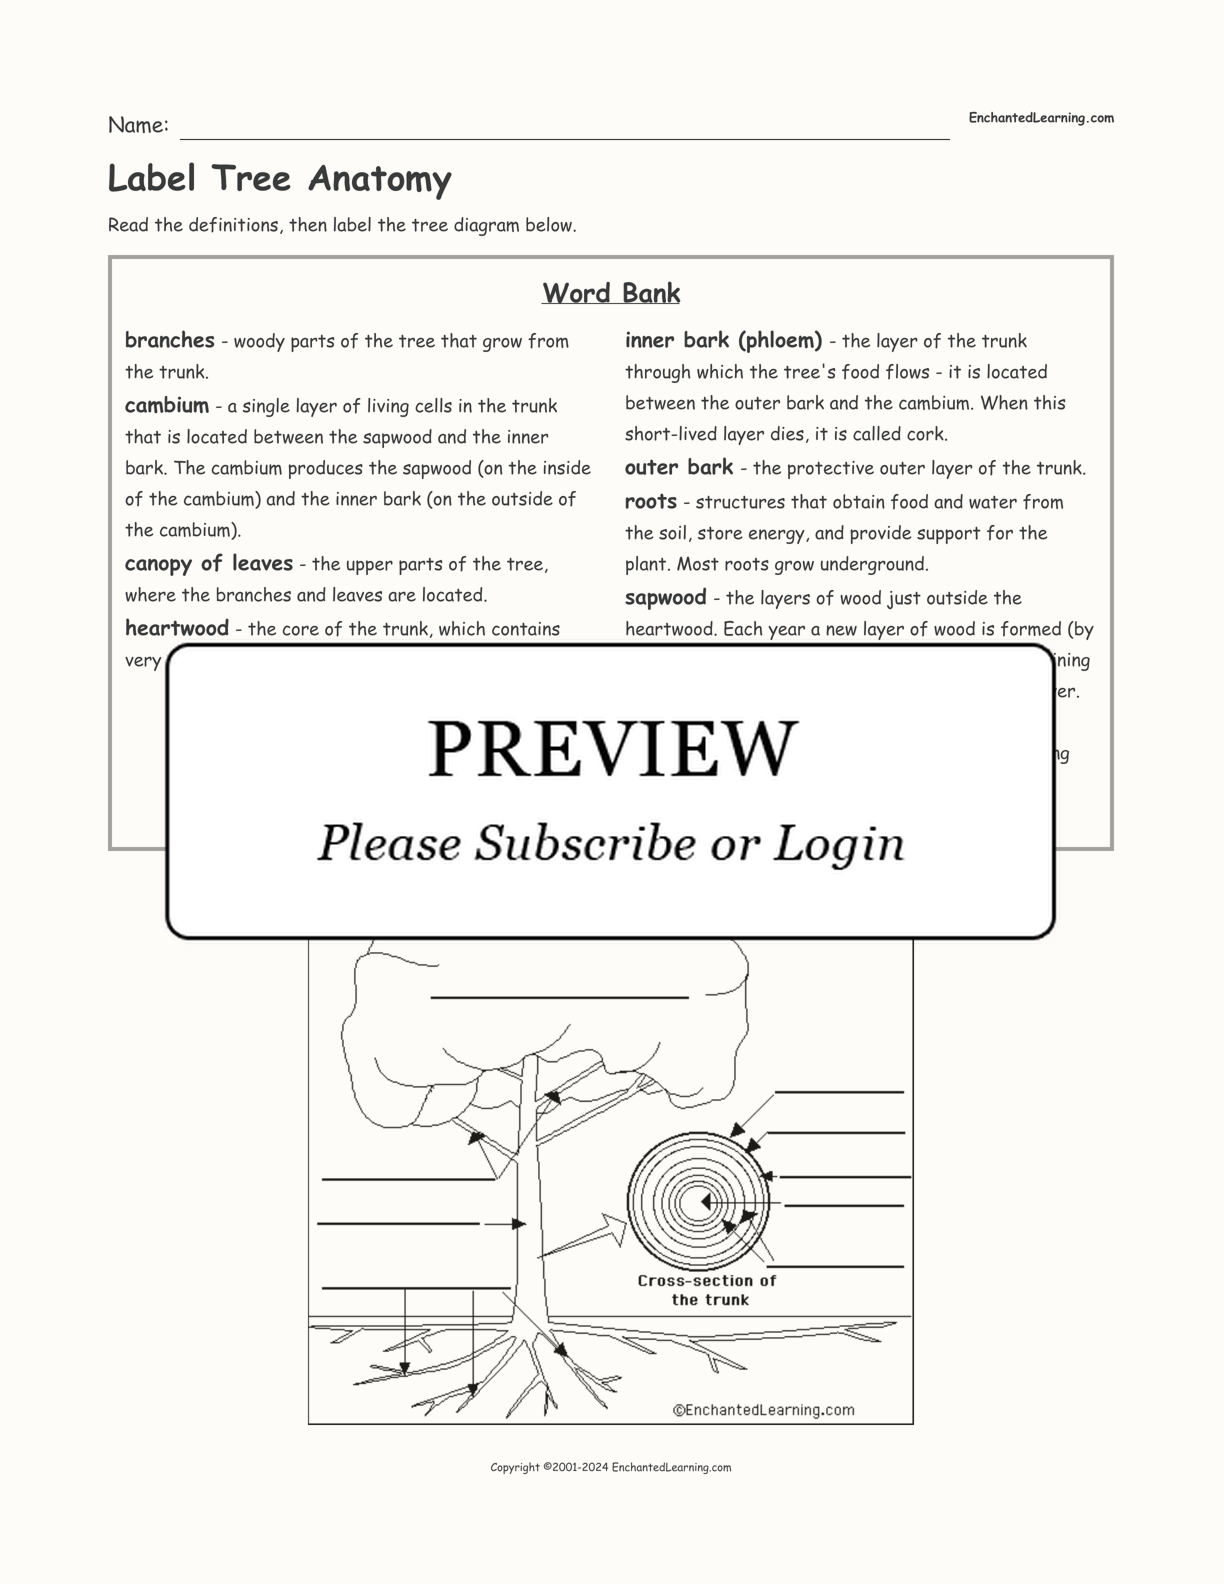 Label Tree Anatomy interactive worksheet page 1